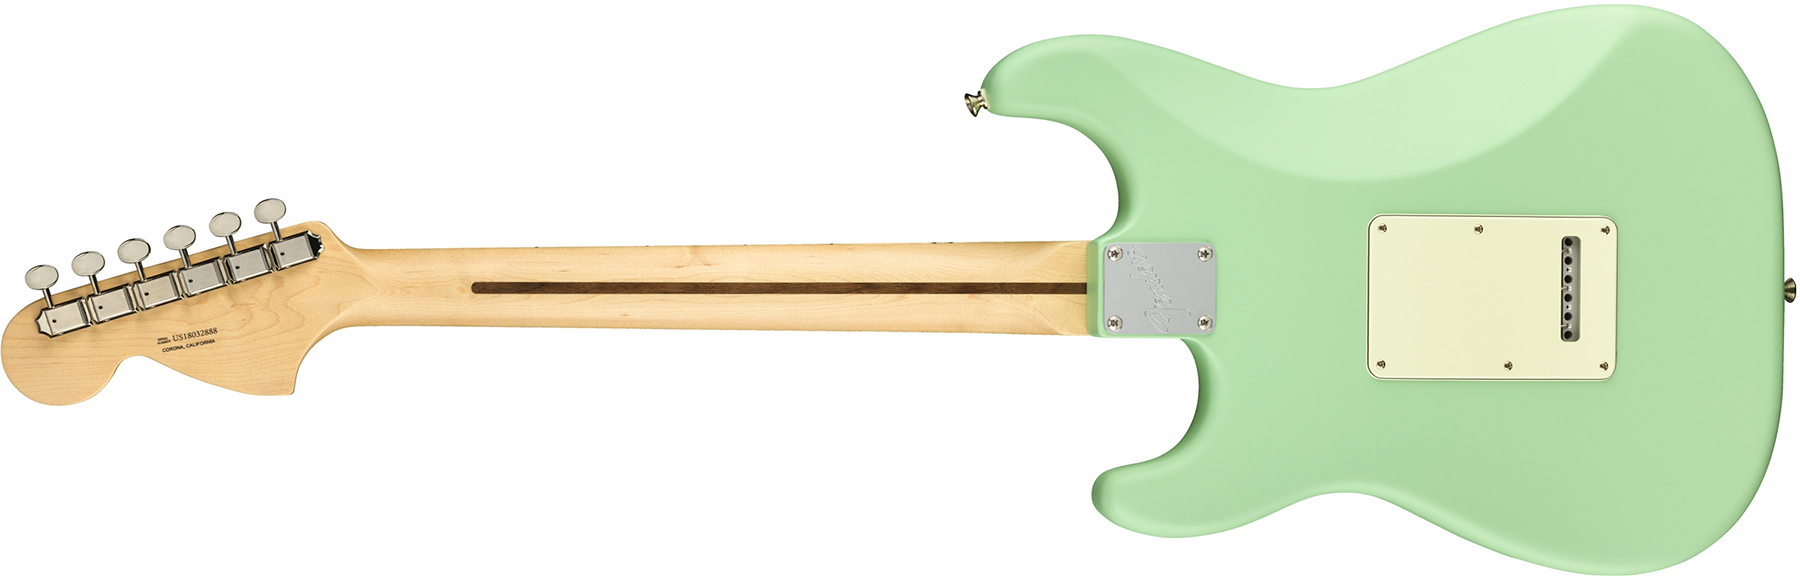 Fender Strat American Performer Usa Hss Mn - Satin Surf Green - Str shape electric guitar - Variation 1